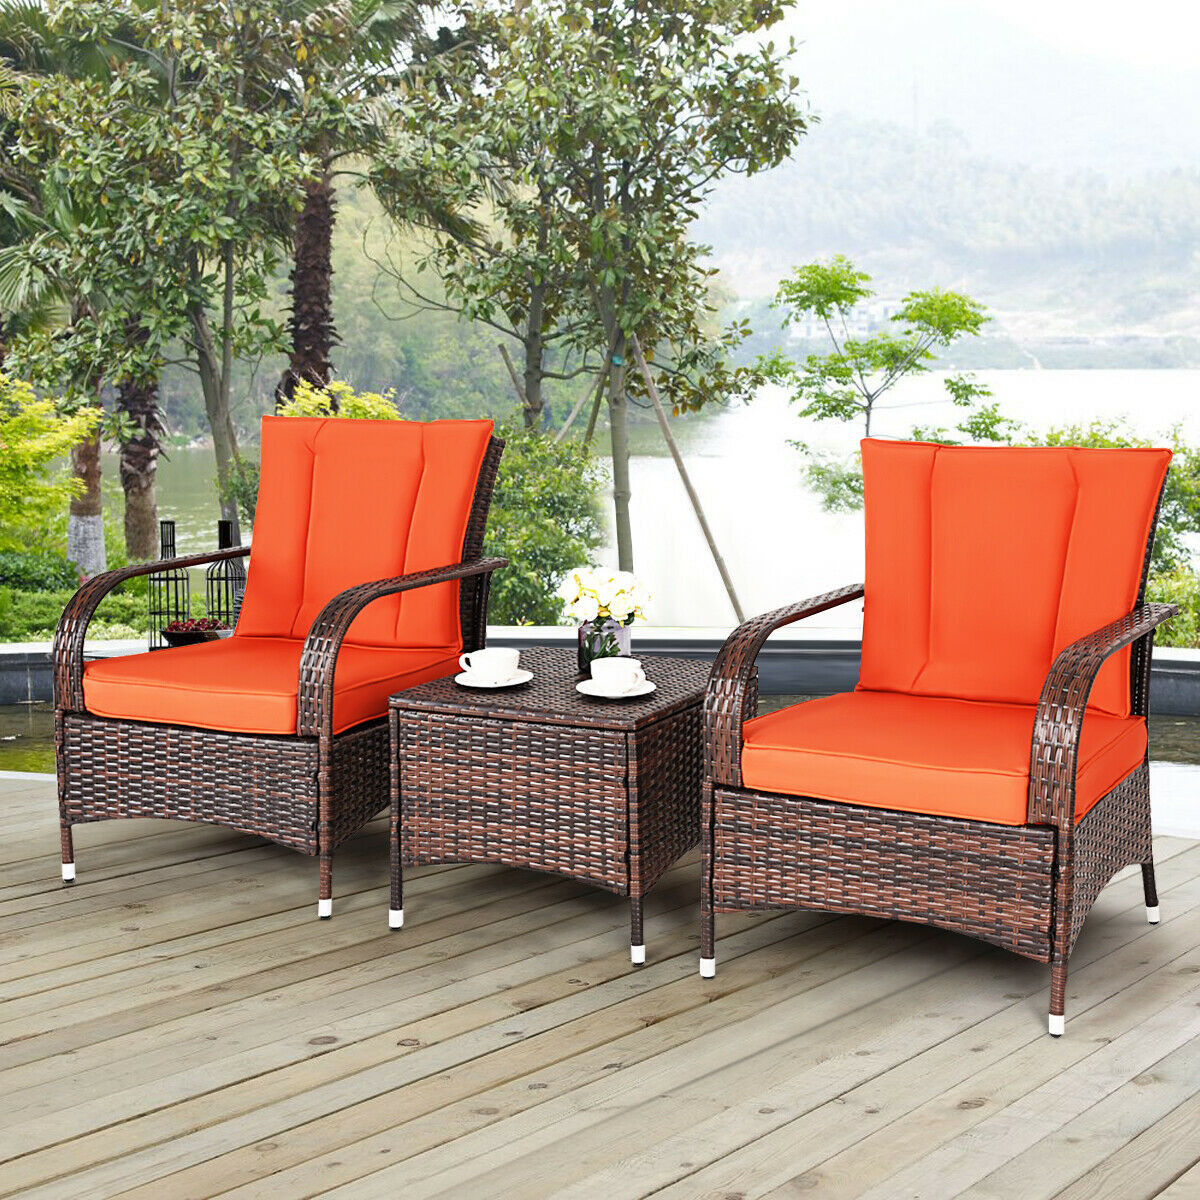 Backyard Furniture Sets
 Costway 3PCS Outdoor Patio Mix Brown Rattan Wicker